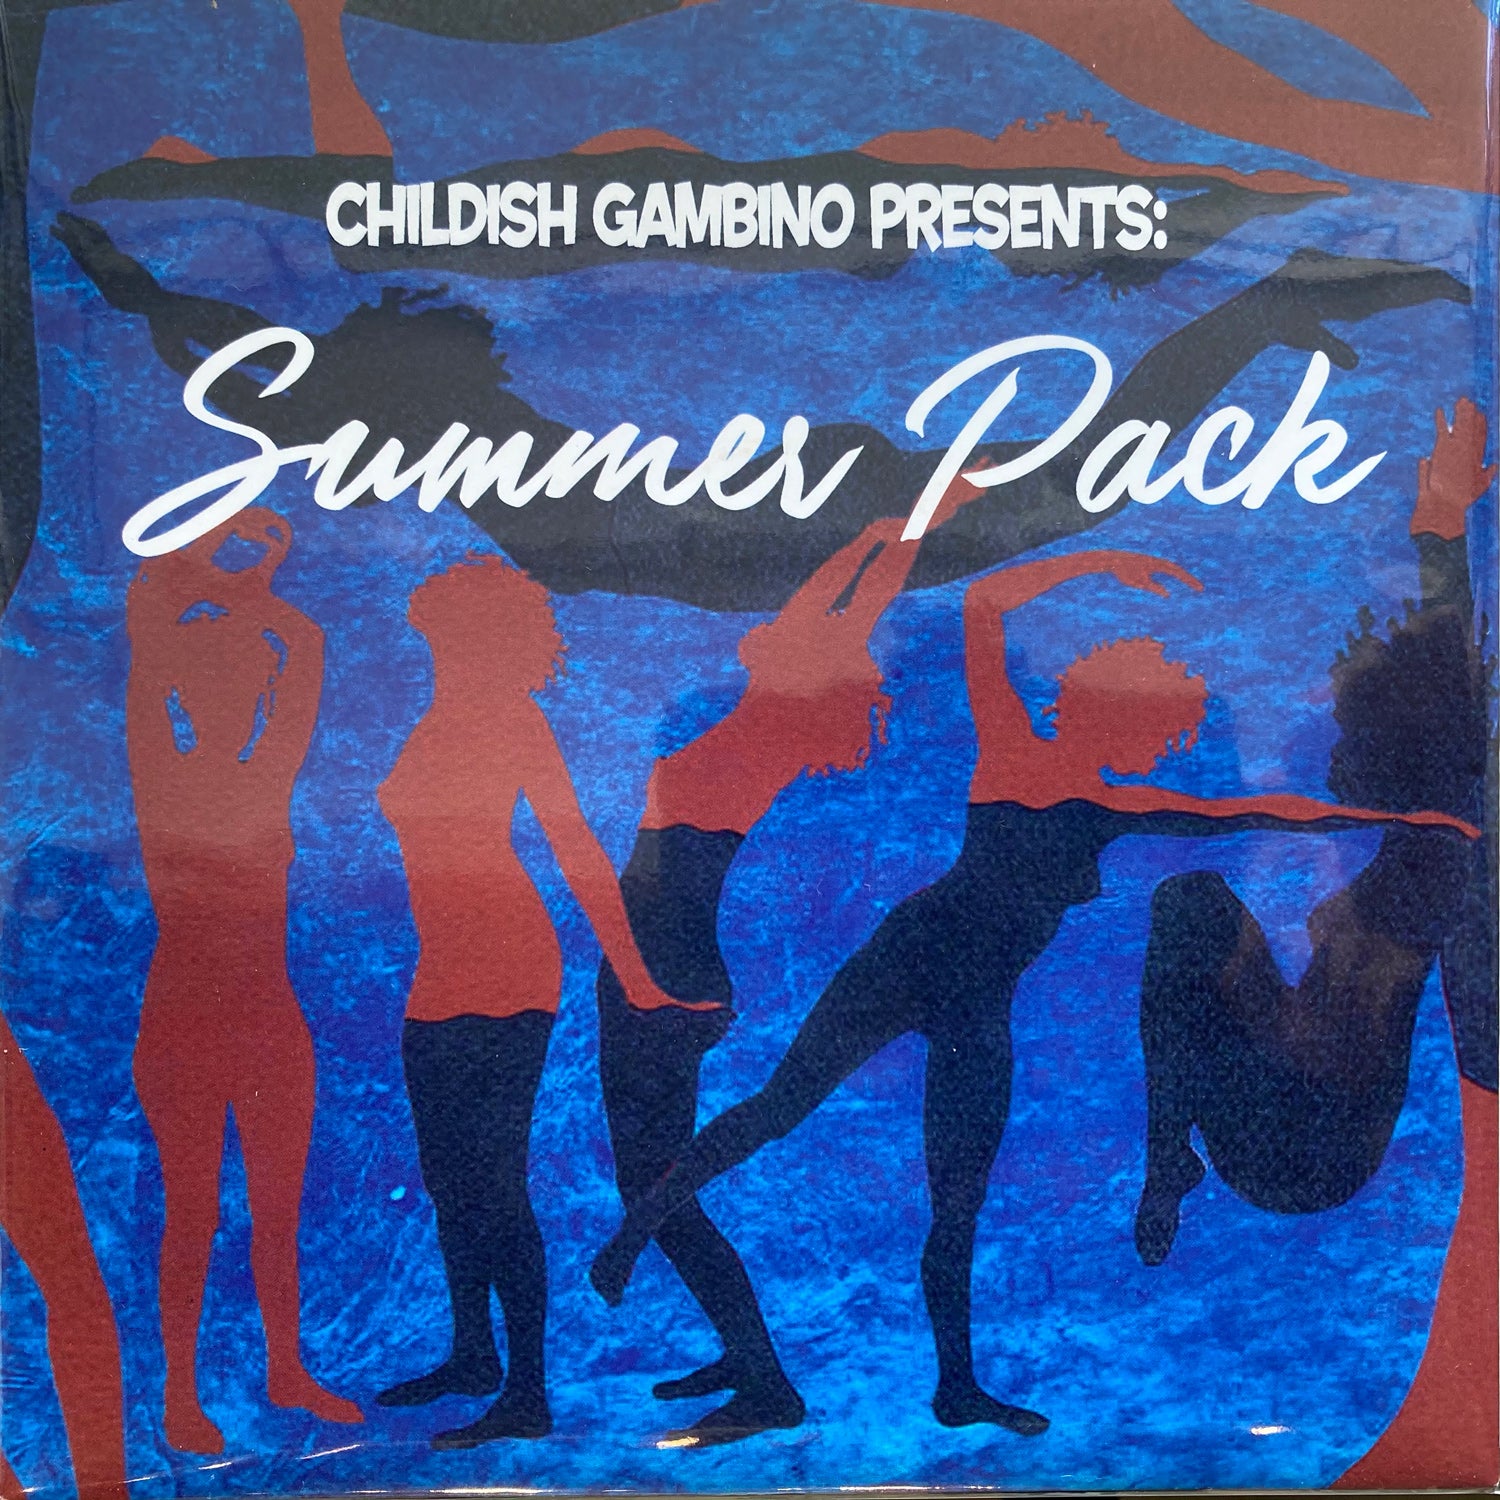 Childish Gambino - Summer Pack (7"): Summertime Magic / Feels Like Summer